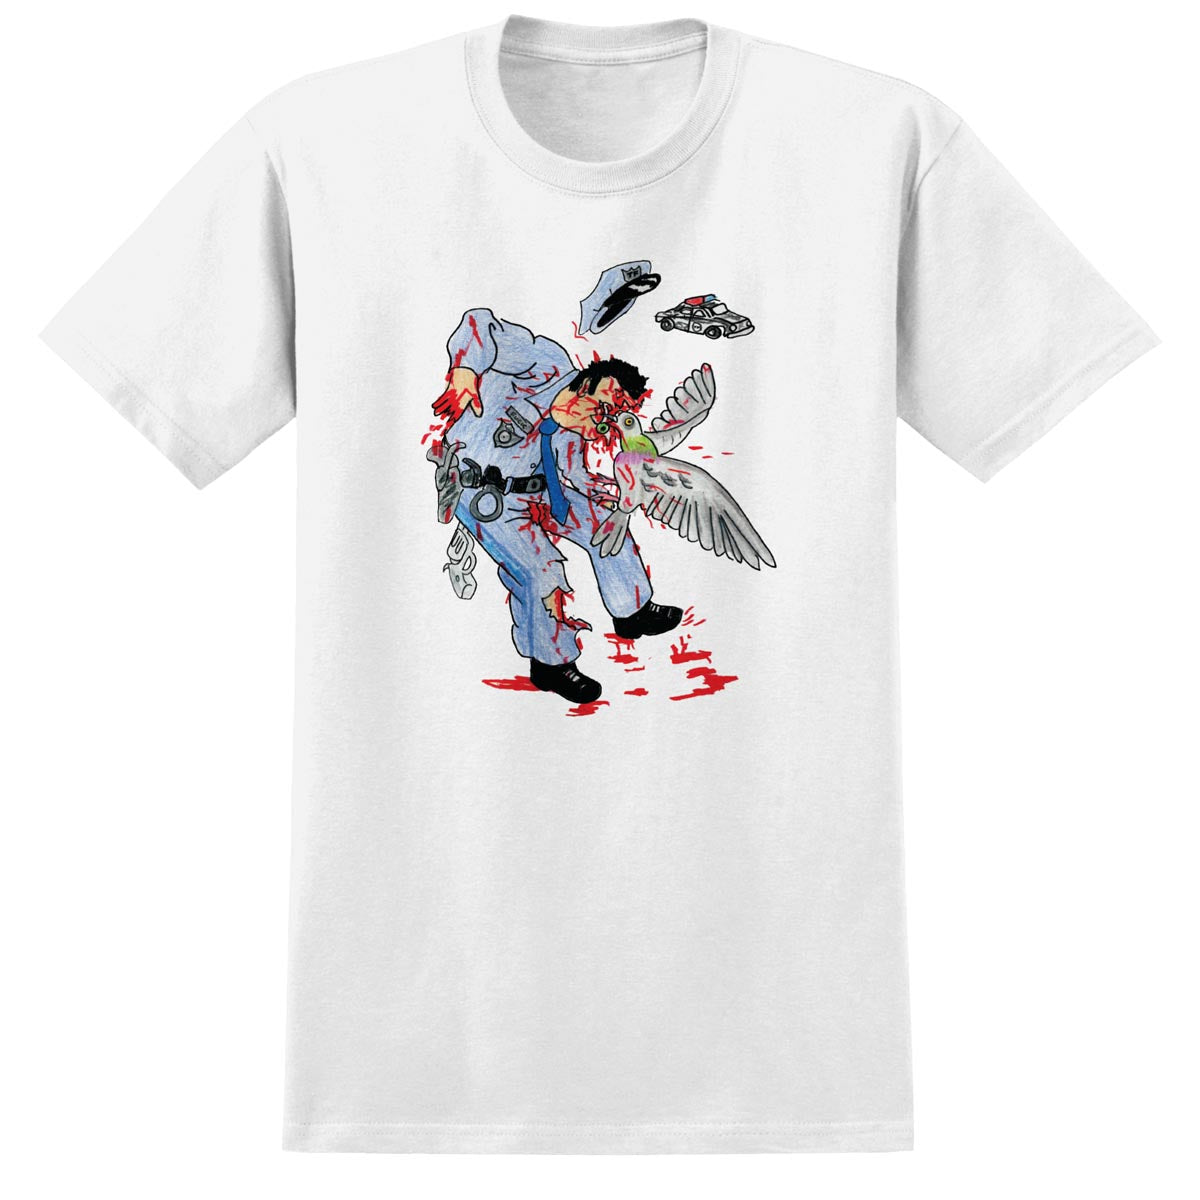 Anti-Hero Pigeon Attack T-Shirt - White/Multi Color image 1